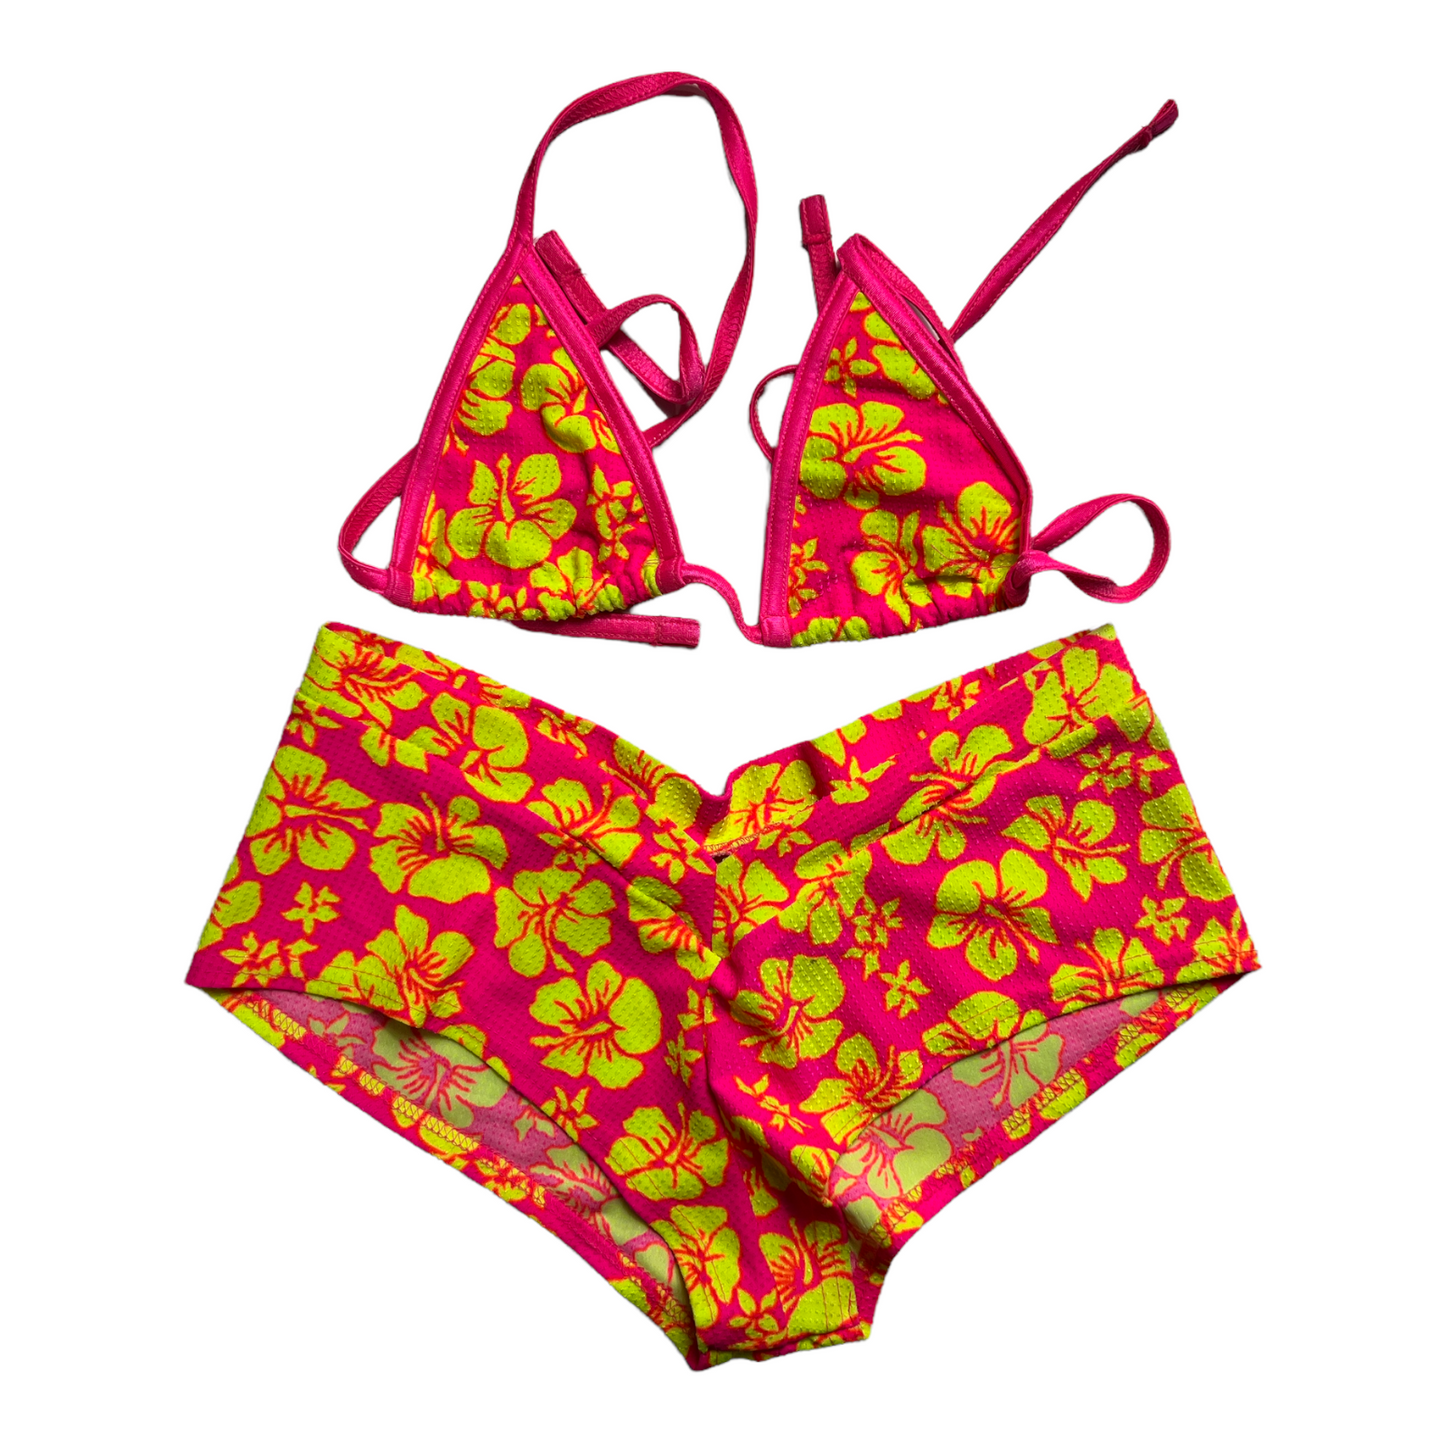 New Neon Pink/Yellow String Bikini Top with Boy Short Swimsuit size S (SwimWear)